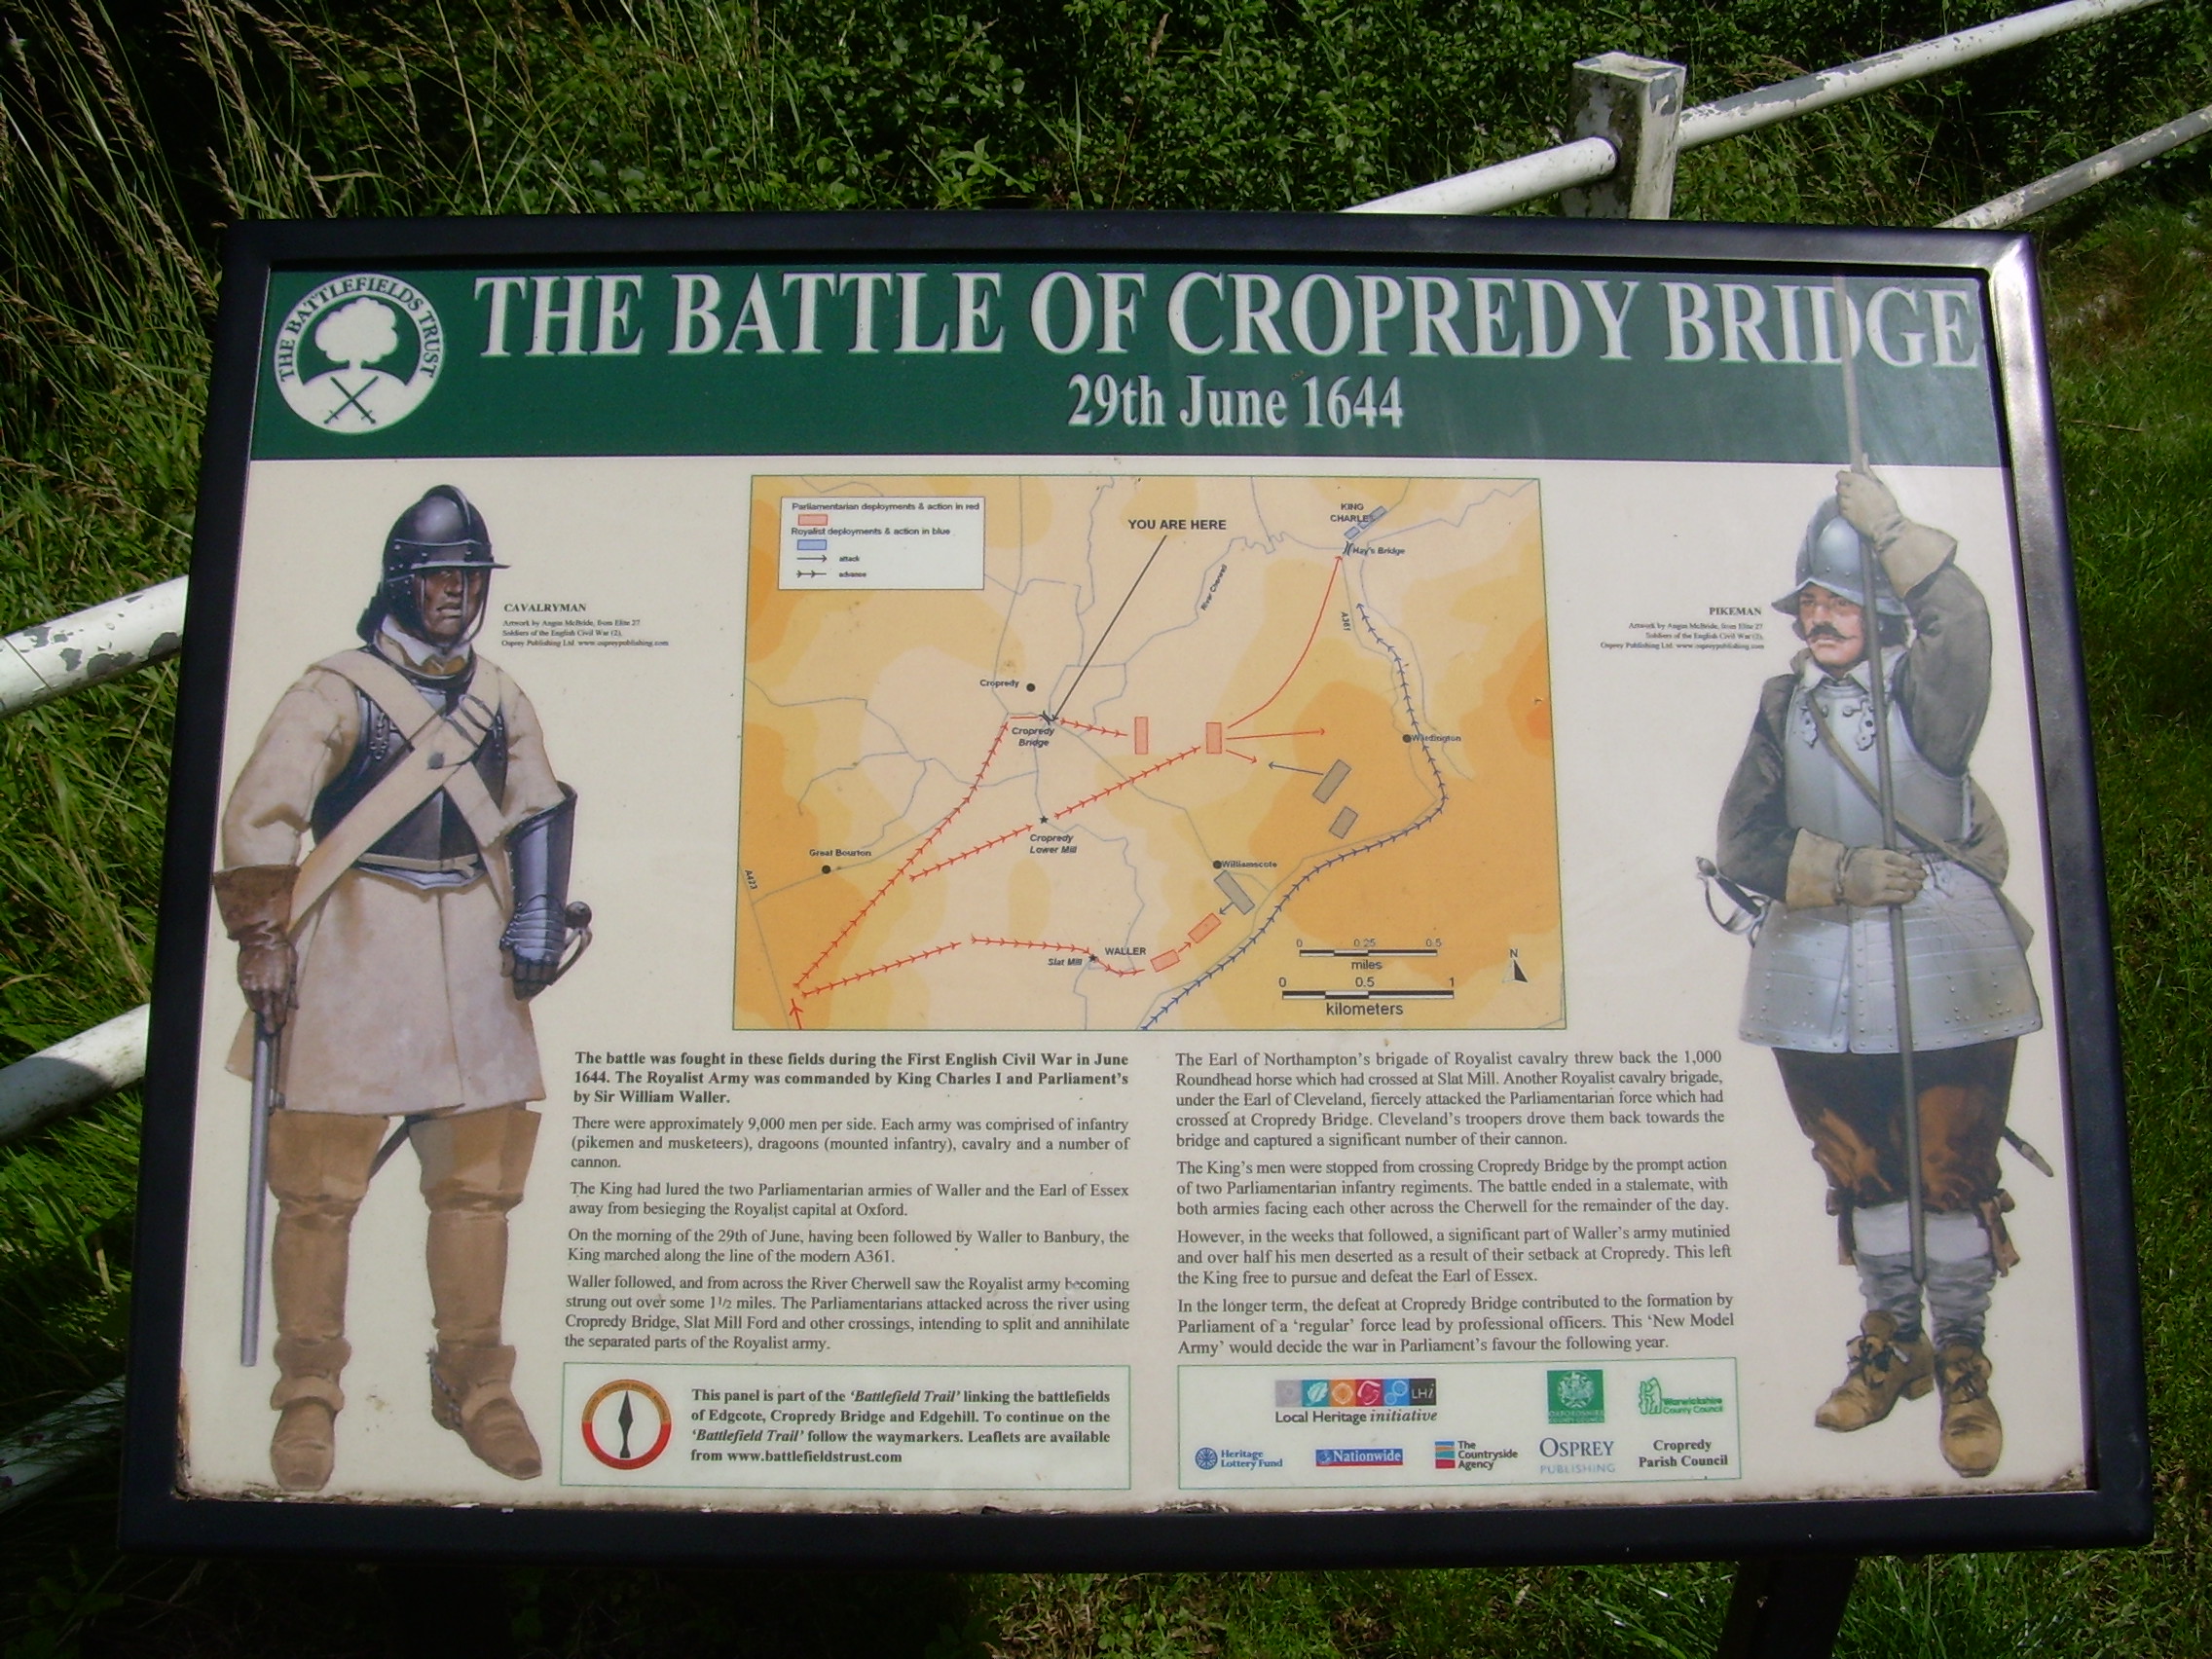 The information board at Cropredy Bridge